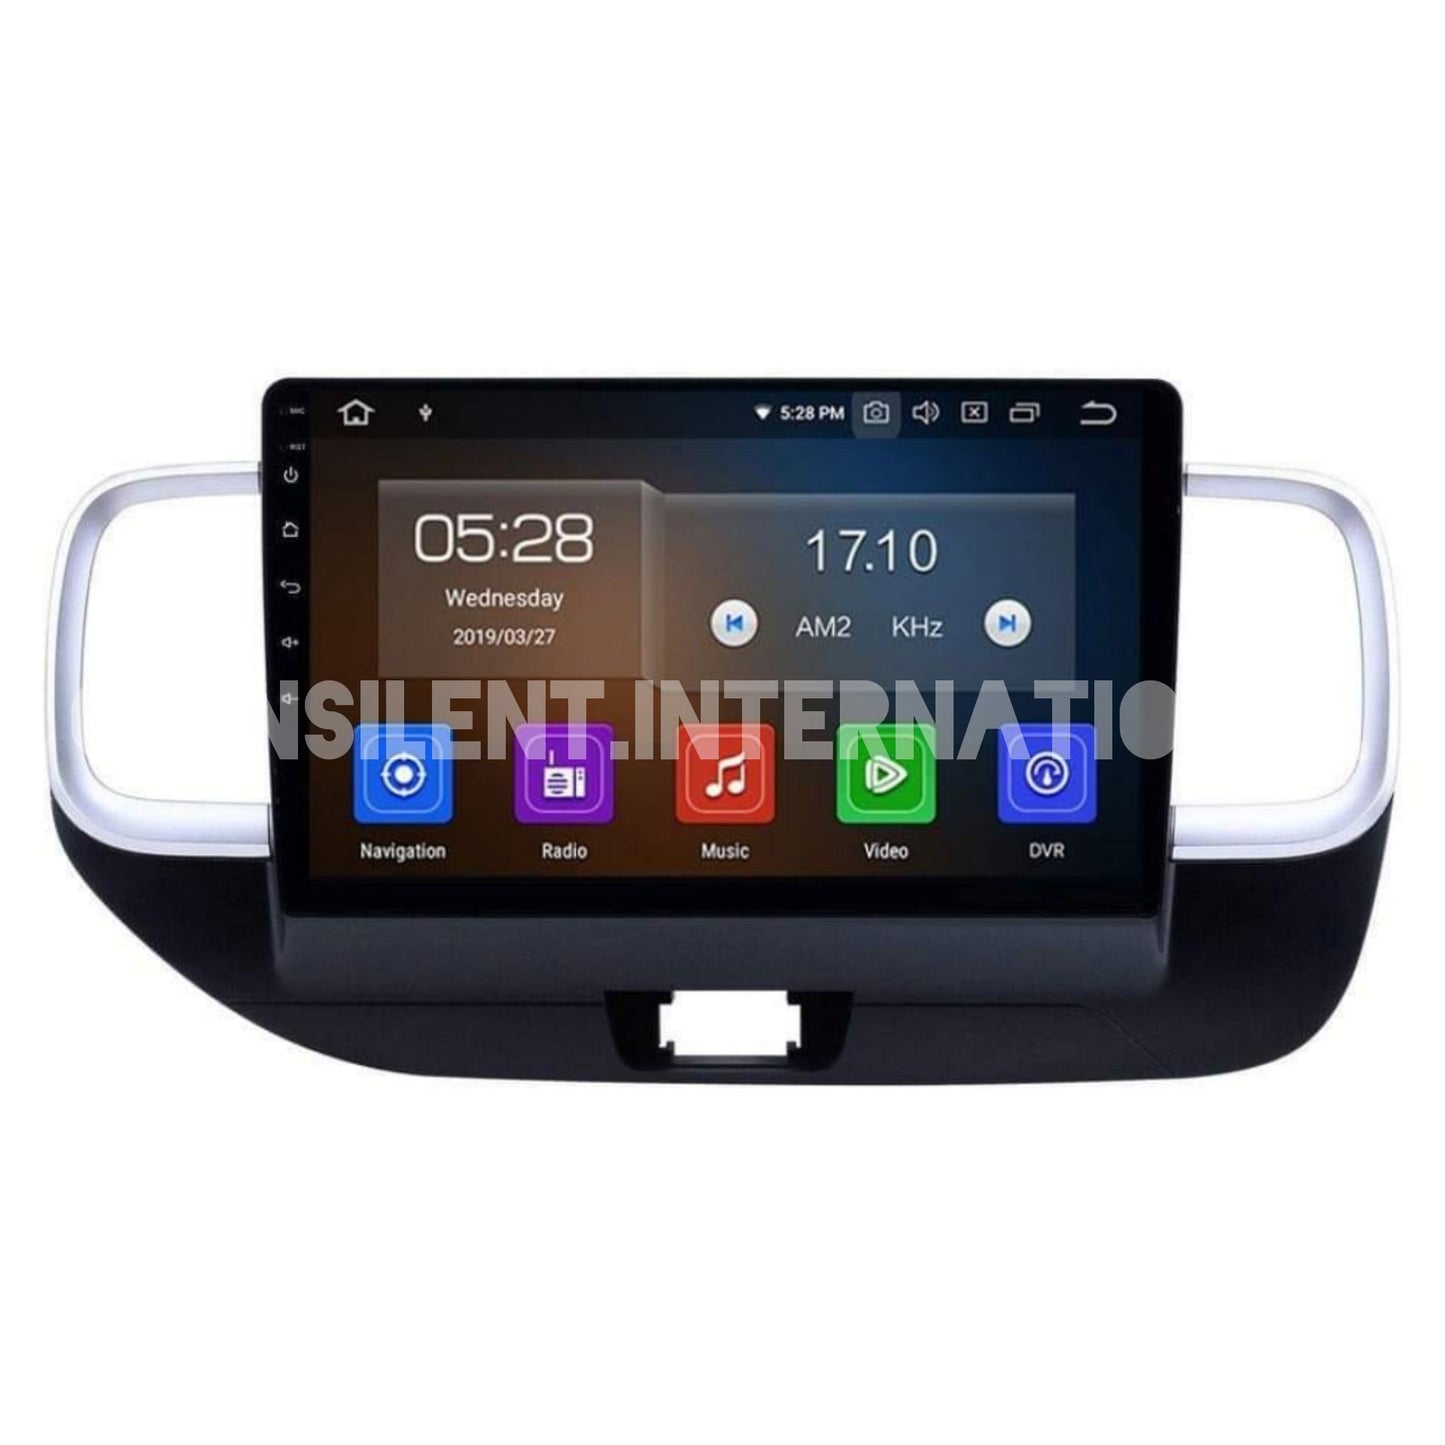 Hyundai Santro 2018 DSP Android Car Stereo & Apple Carplay 2gb Ram+32gb ROM With Canbus